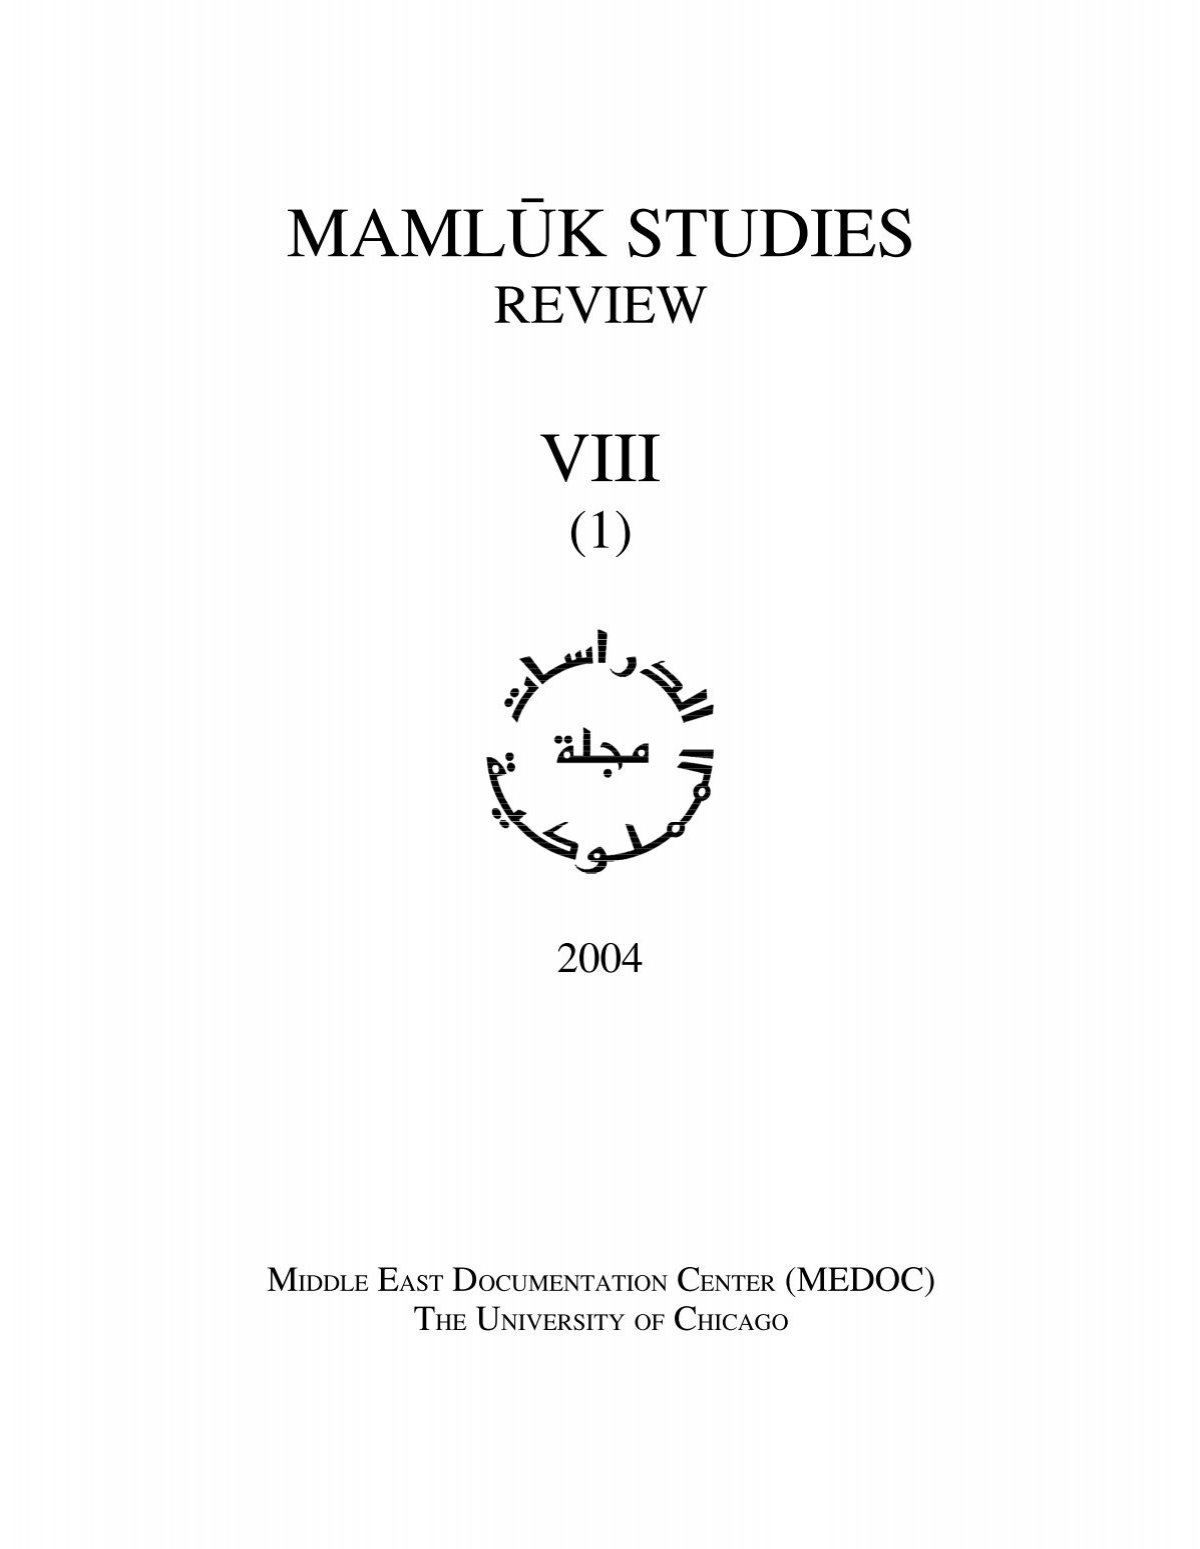 Vol. VIII, no. 1   Mamluk Studies Review   University of Chicago